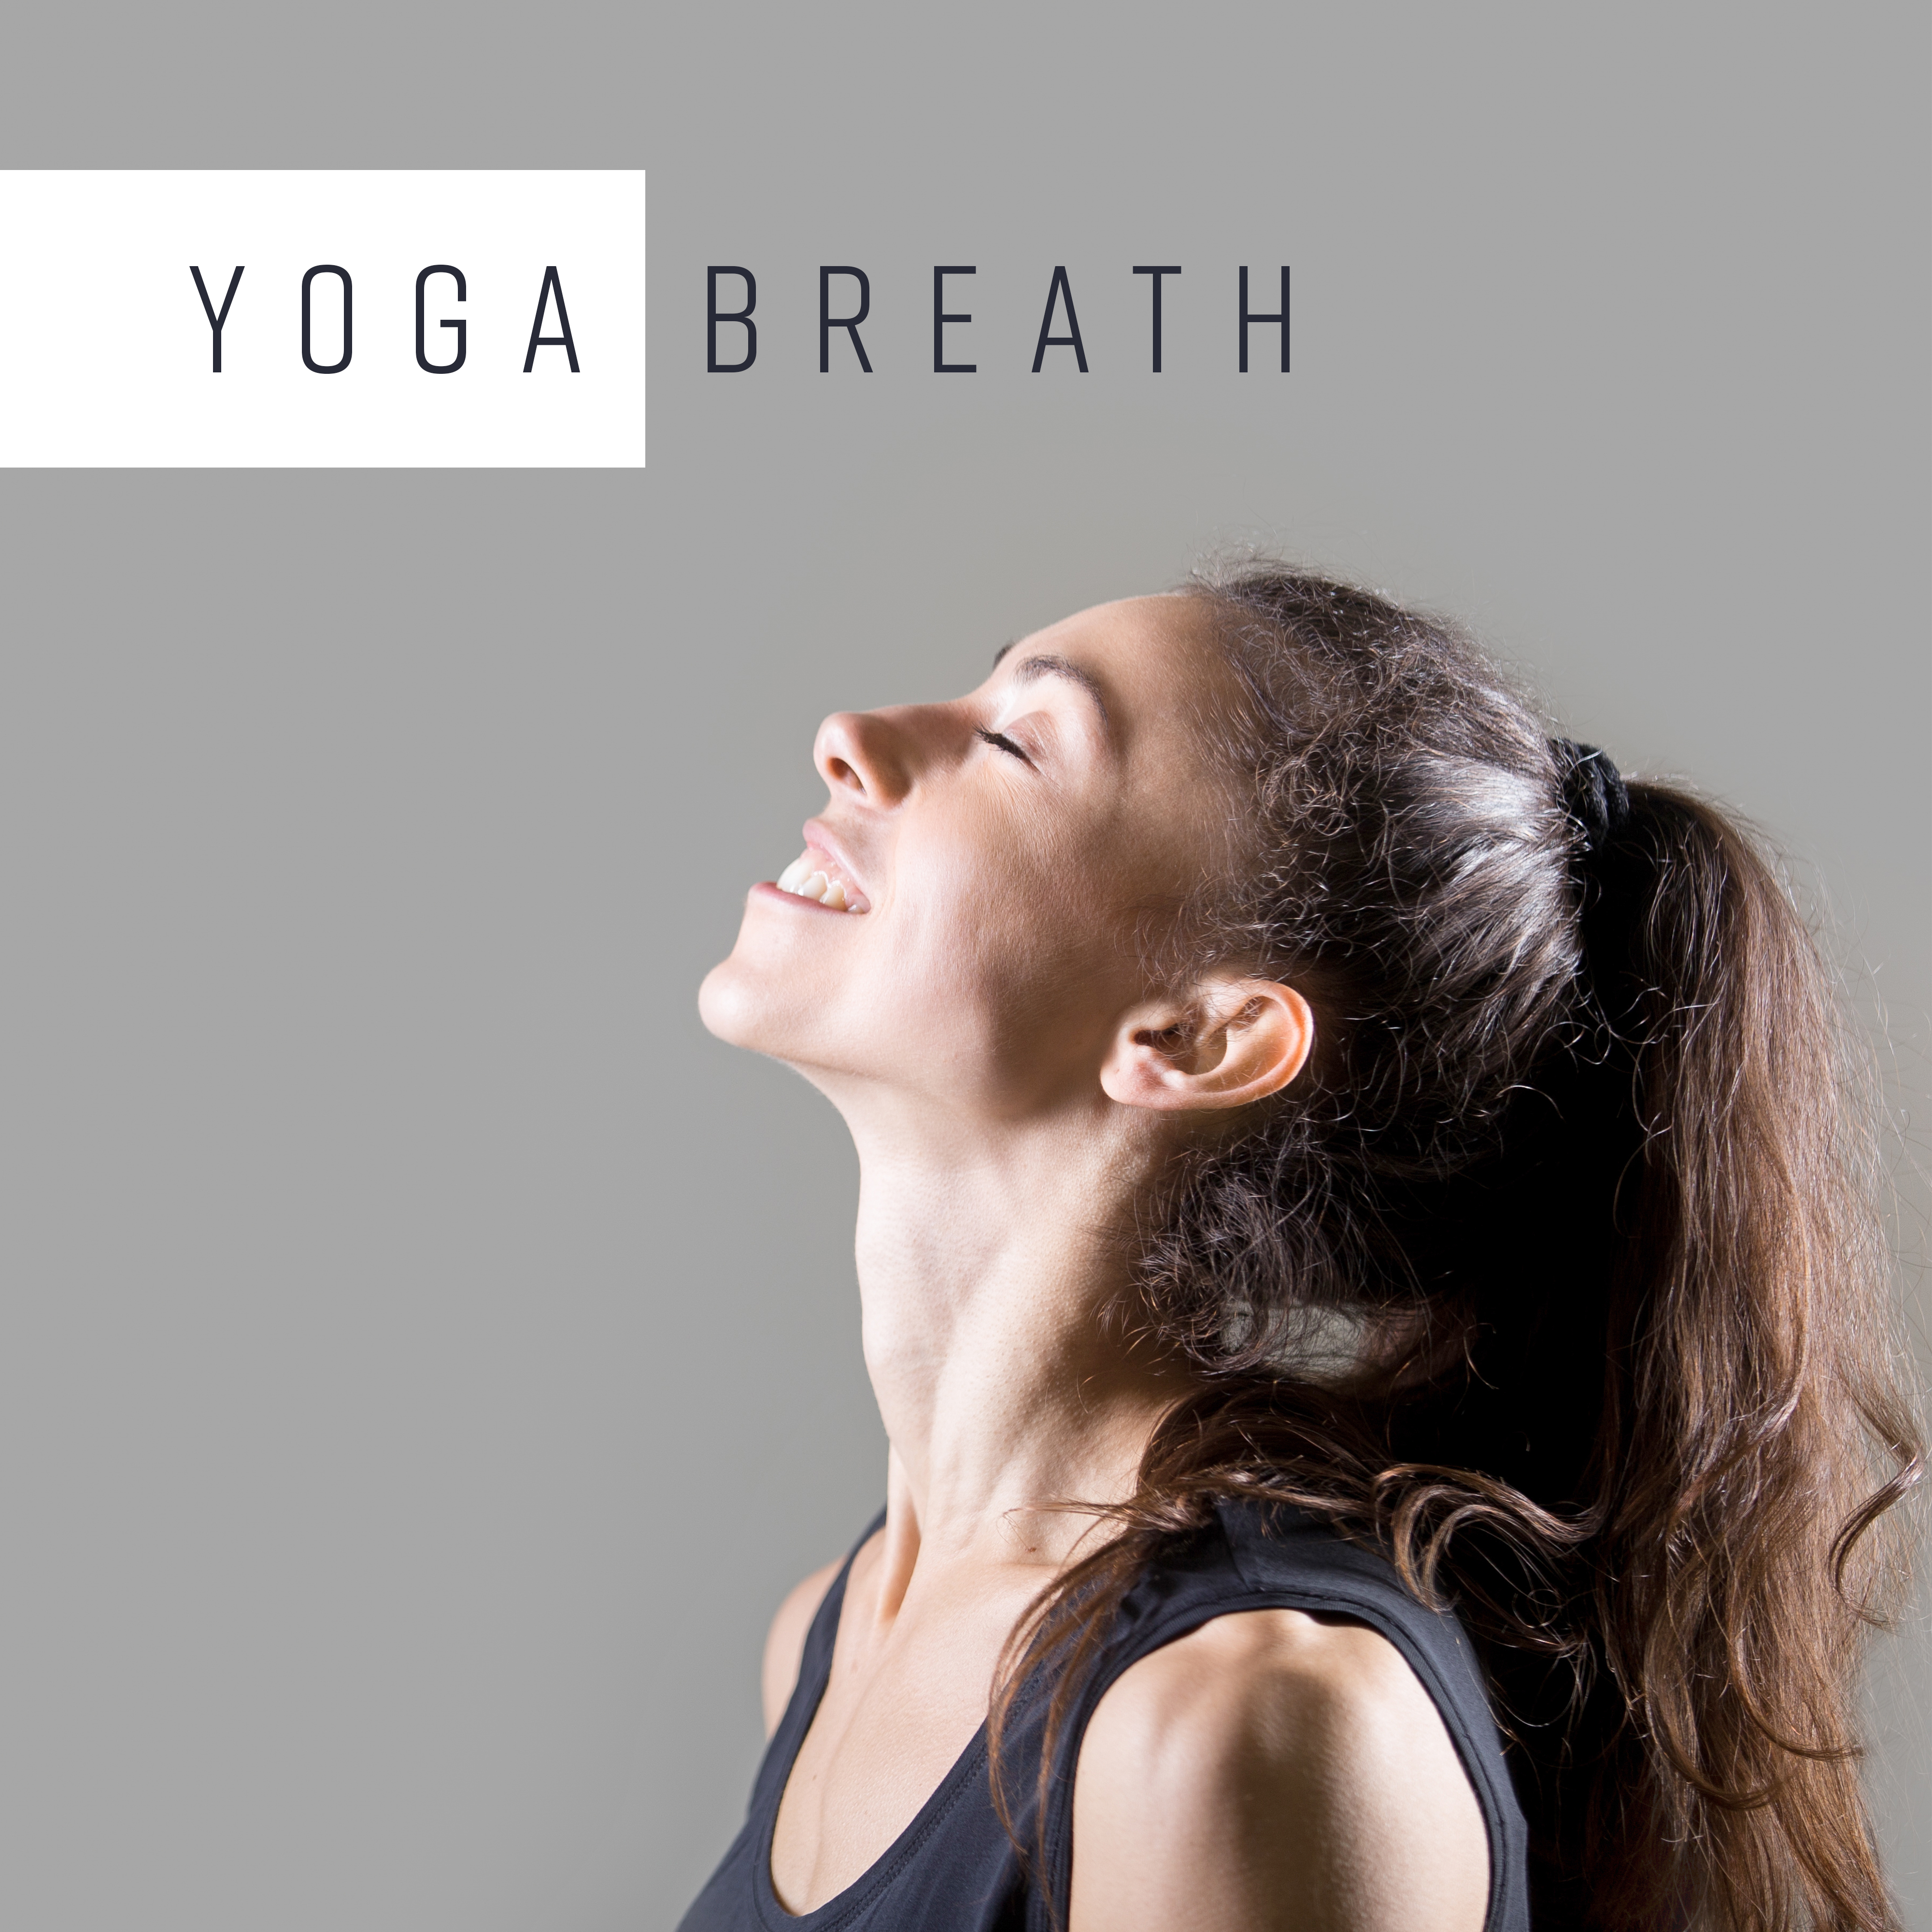 Yoga Breath: Focused Breathing Exercises for Beginners